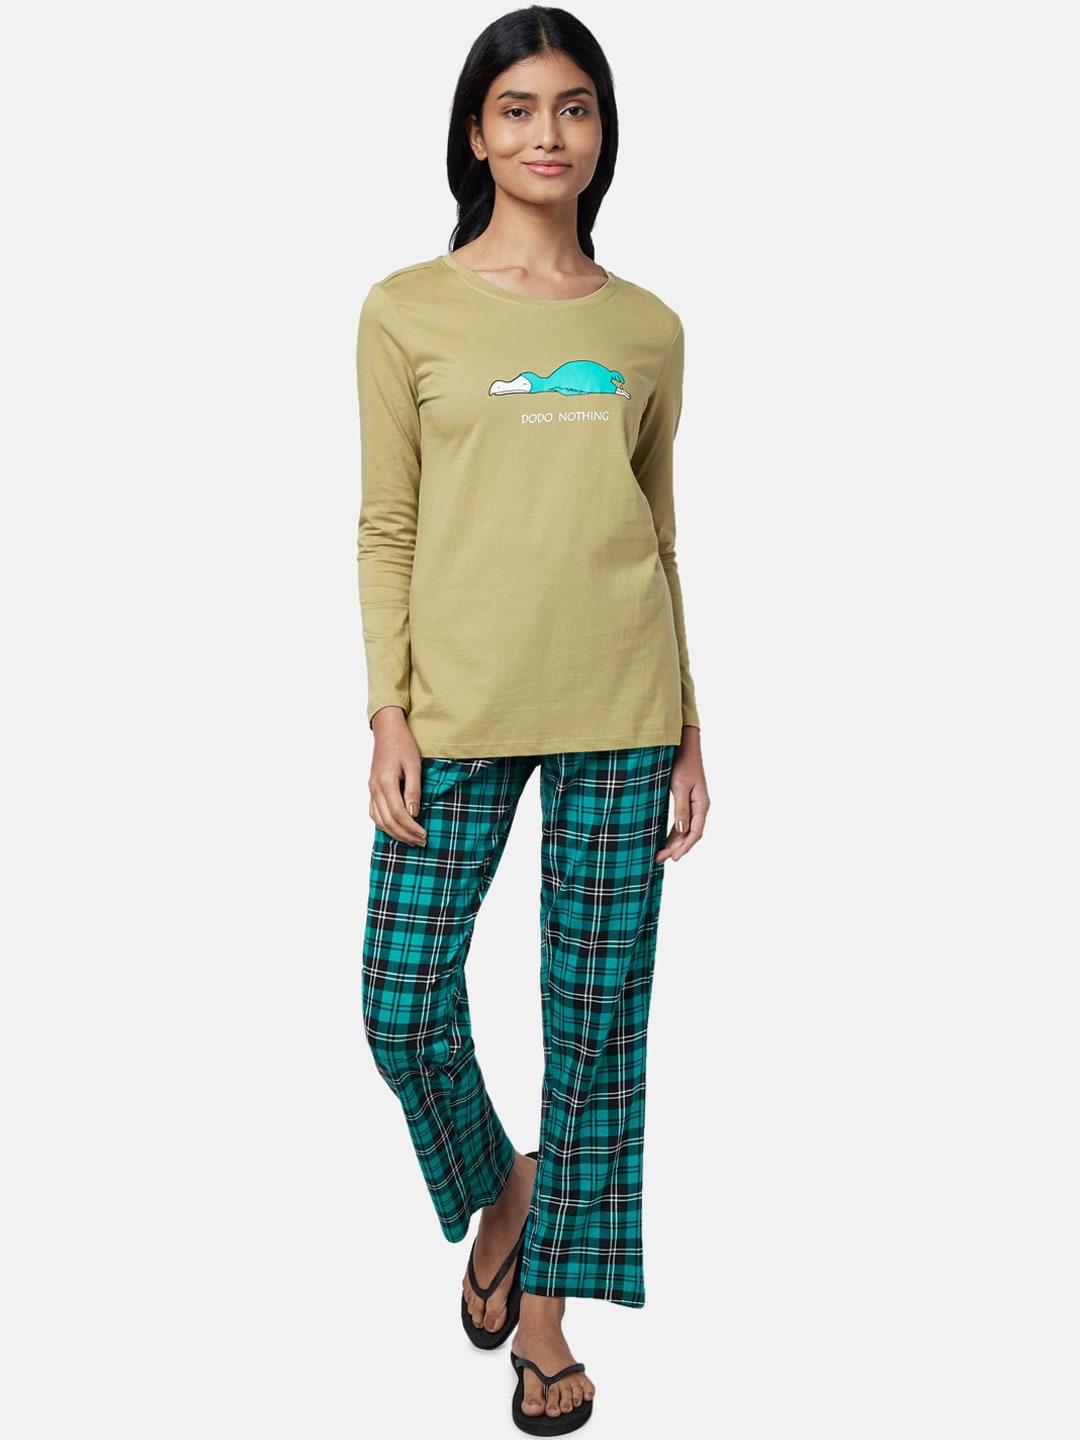 Dreamz by Pantaloons Women Khaki & Green Night suit